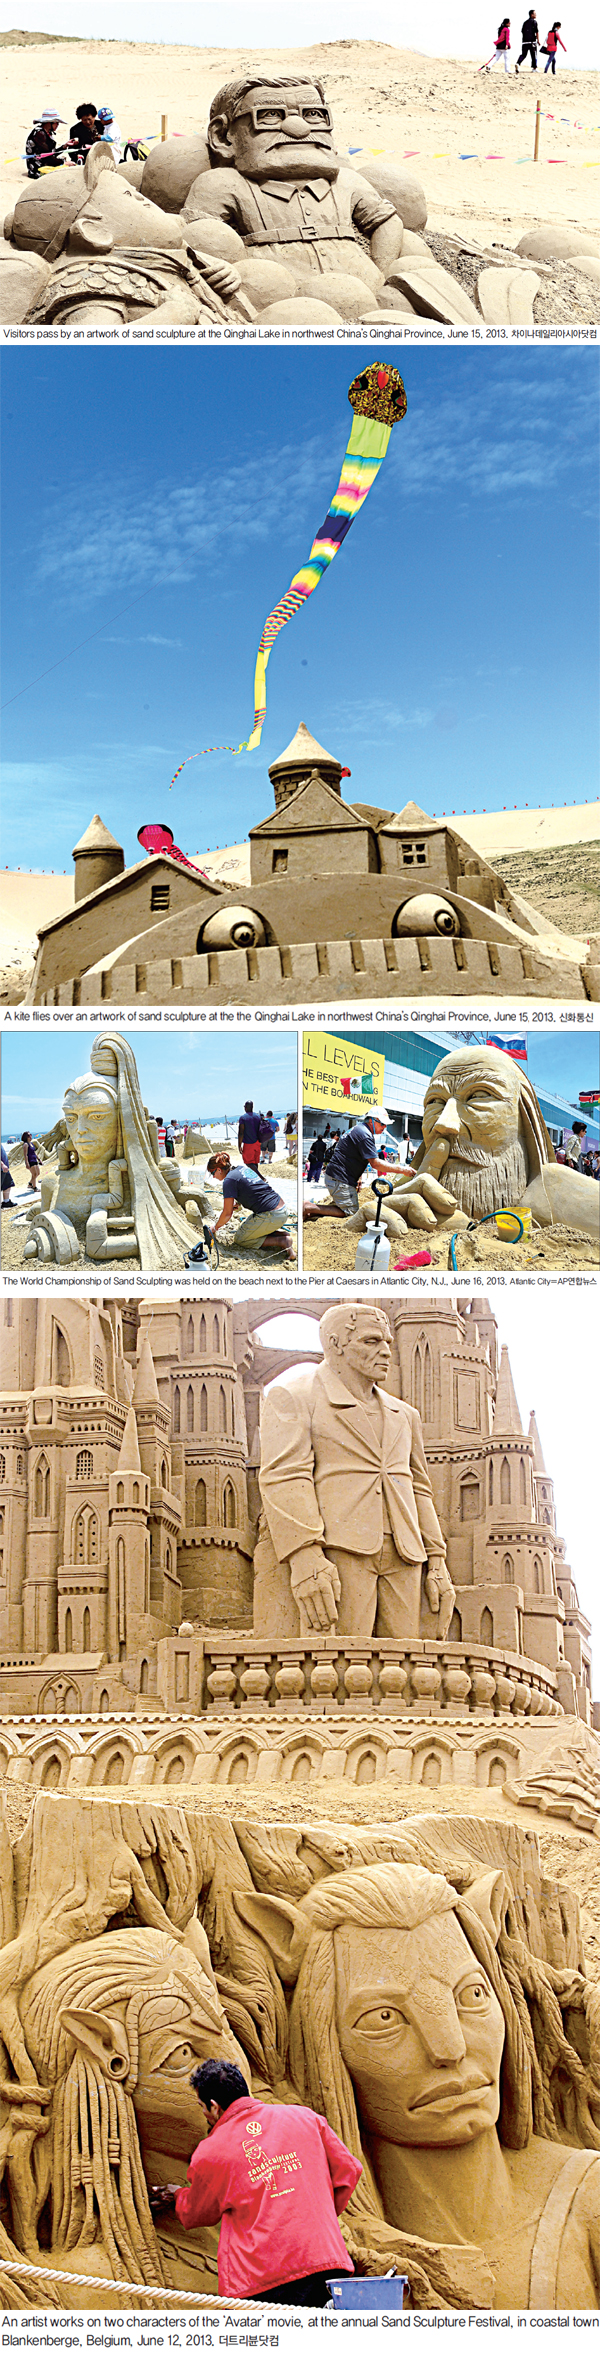 [Around the world]Sculpture made of Sand